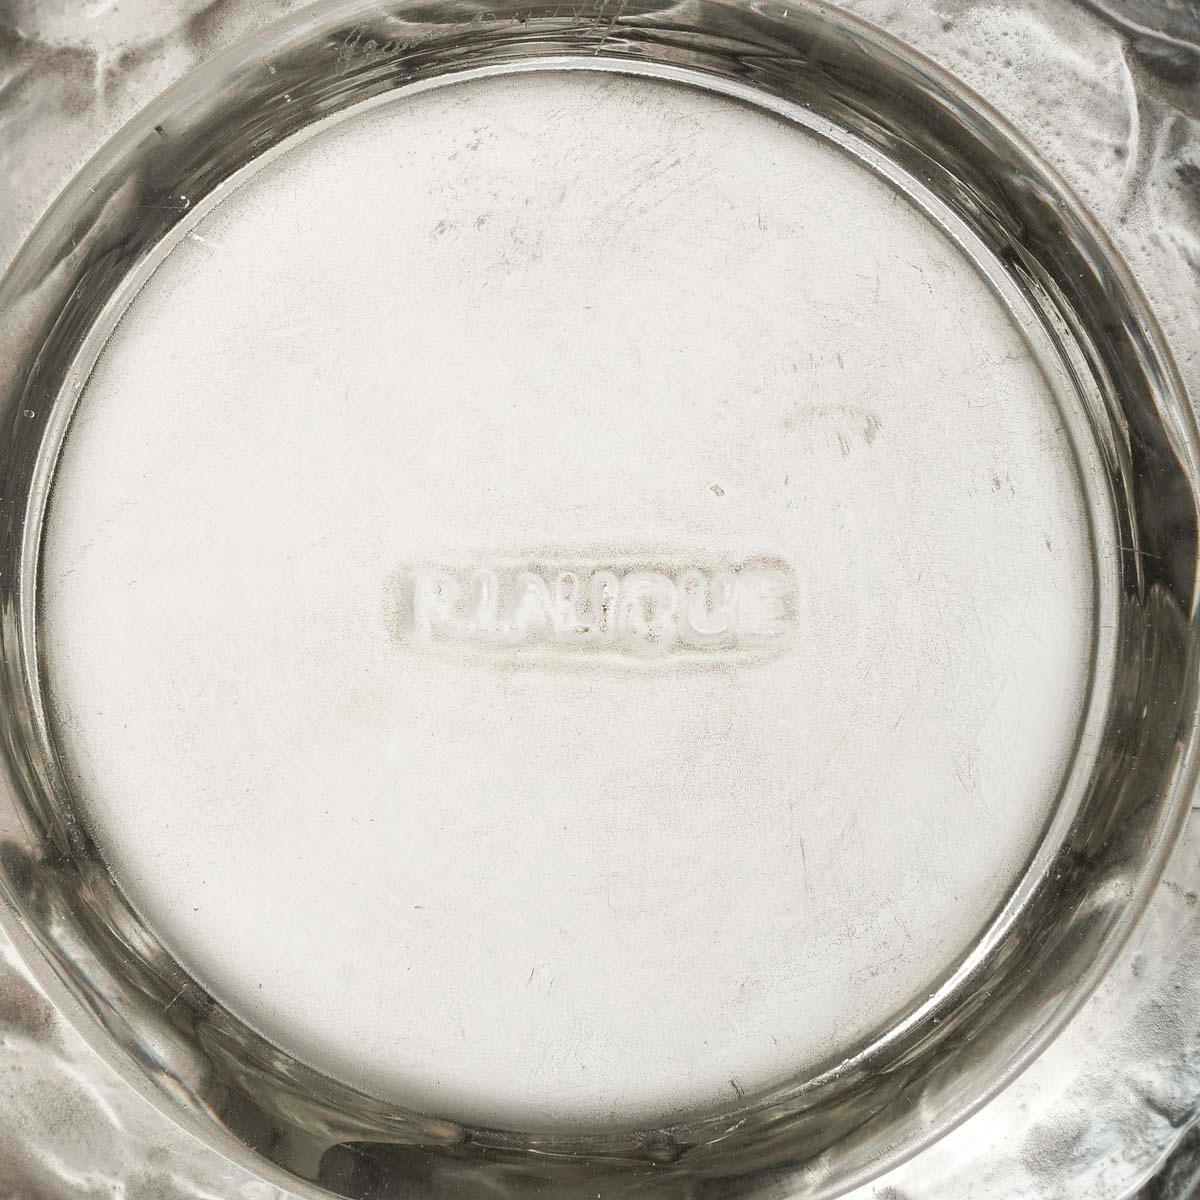 French 1914 René Lalique Vase Monnaie du Pape Frosted Glass Grey Patina